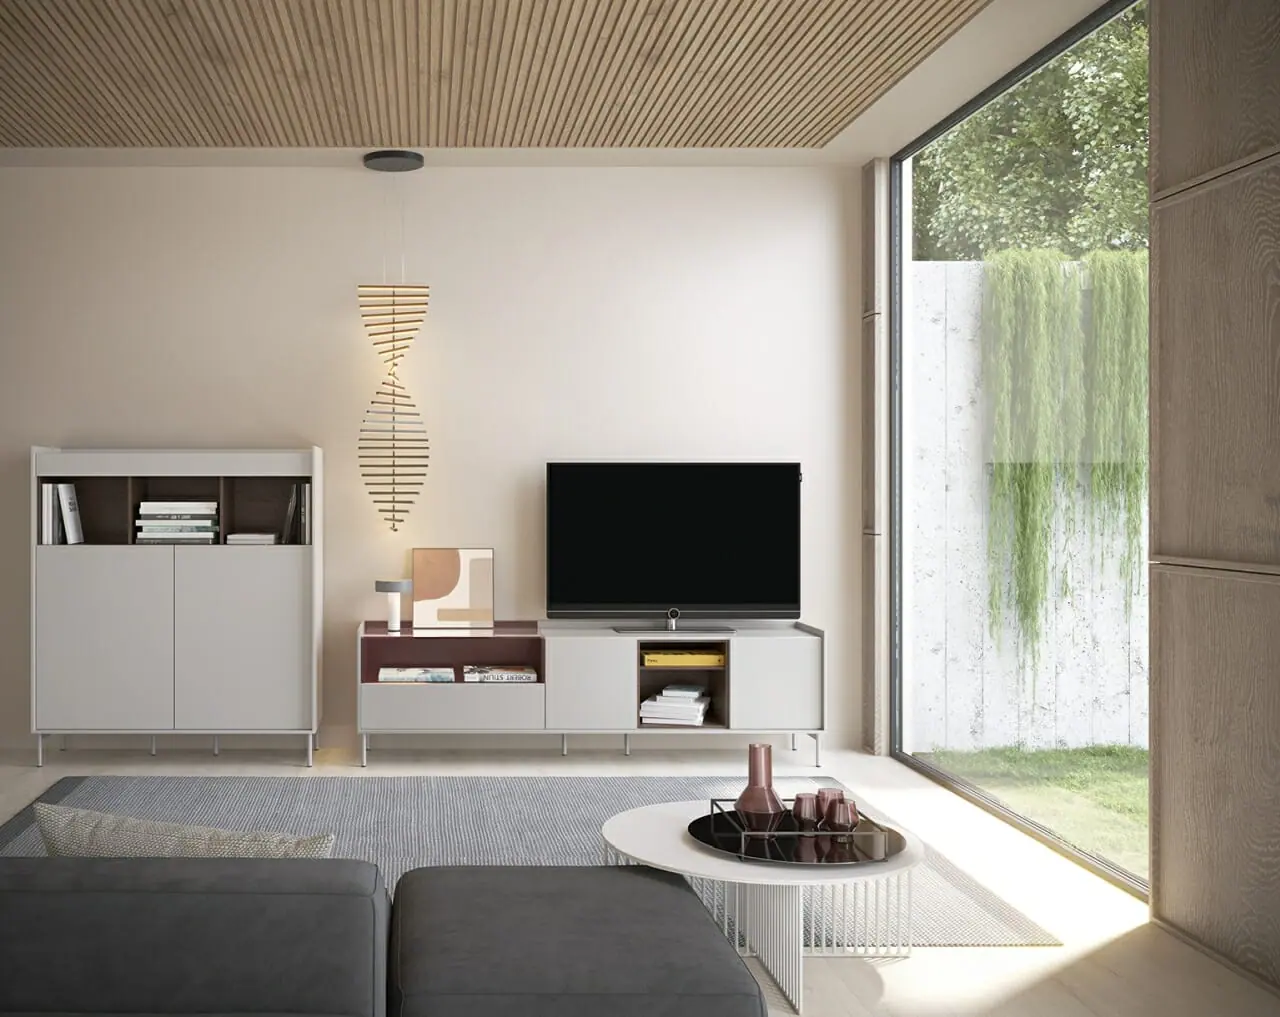 garcia-sabate-replay-living-room-furniture03